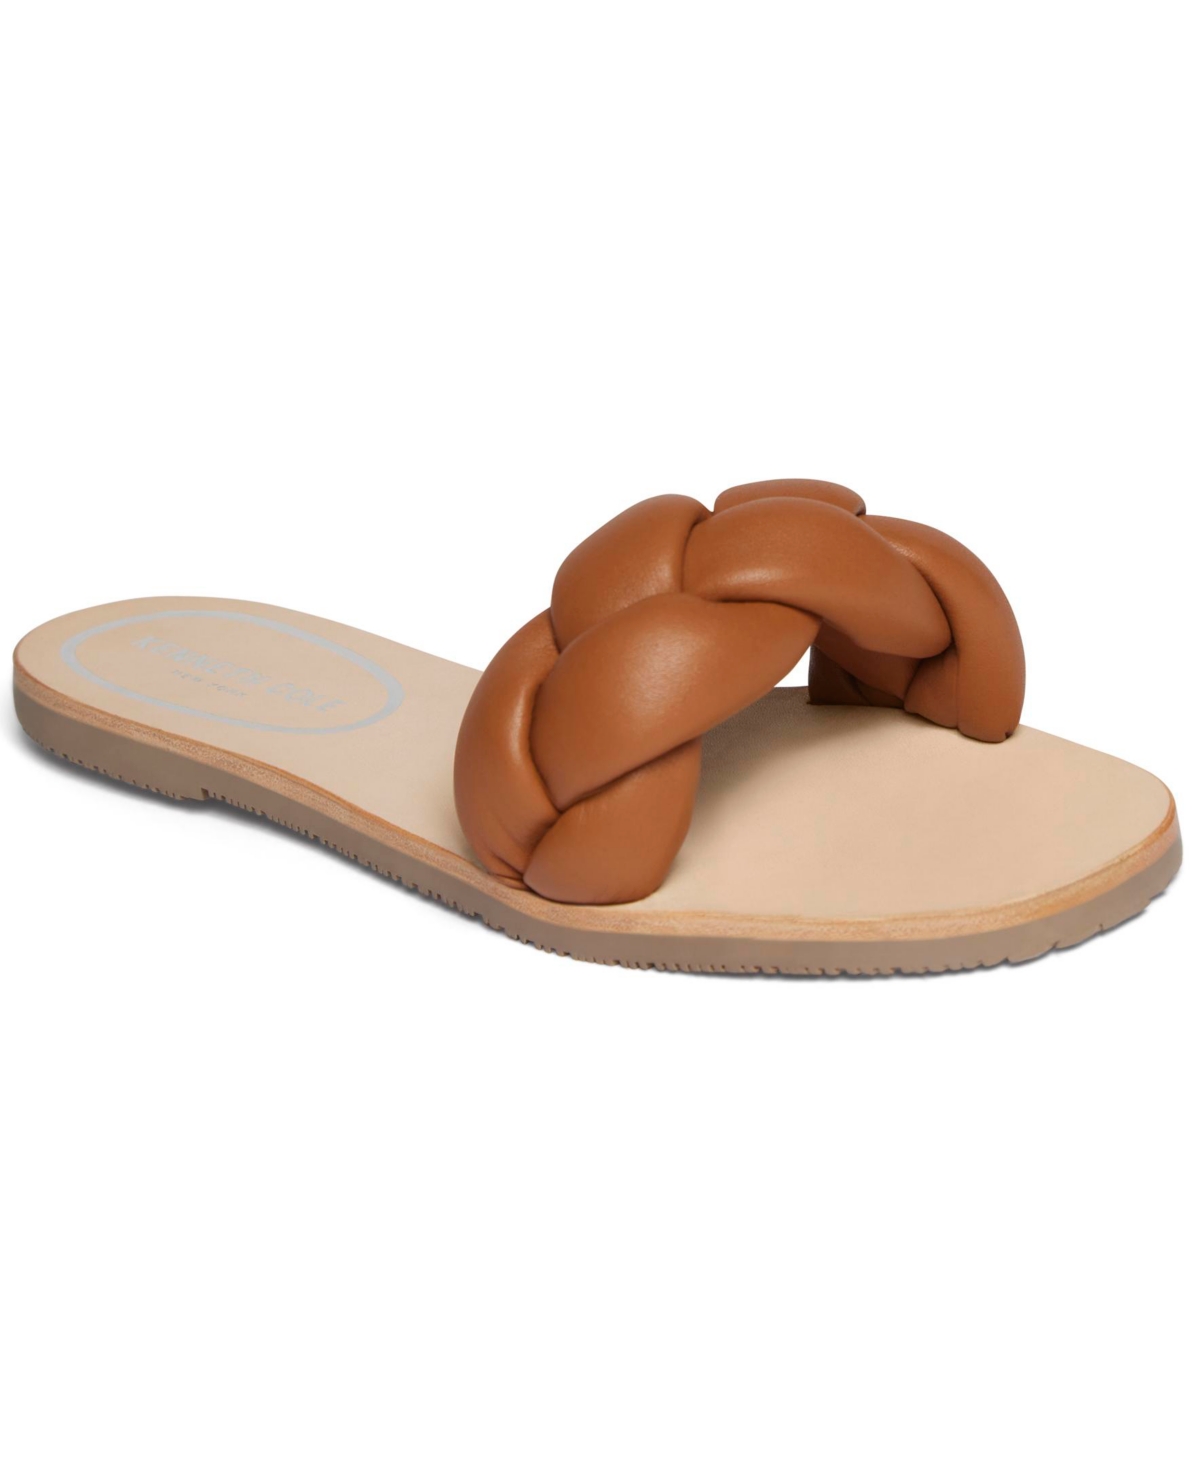 Women's Nellie Braid Slide Sandals - Cognac